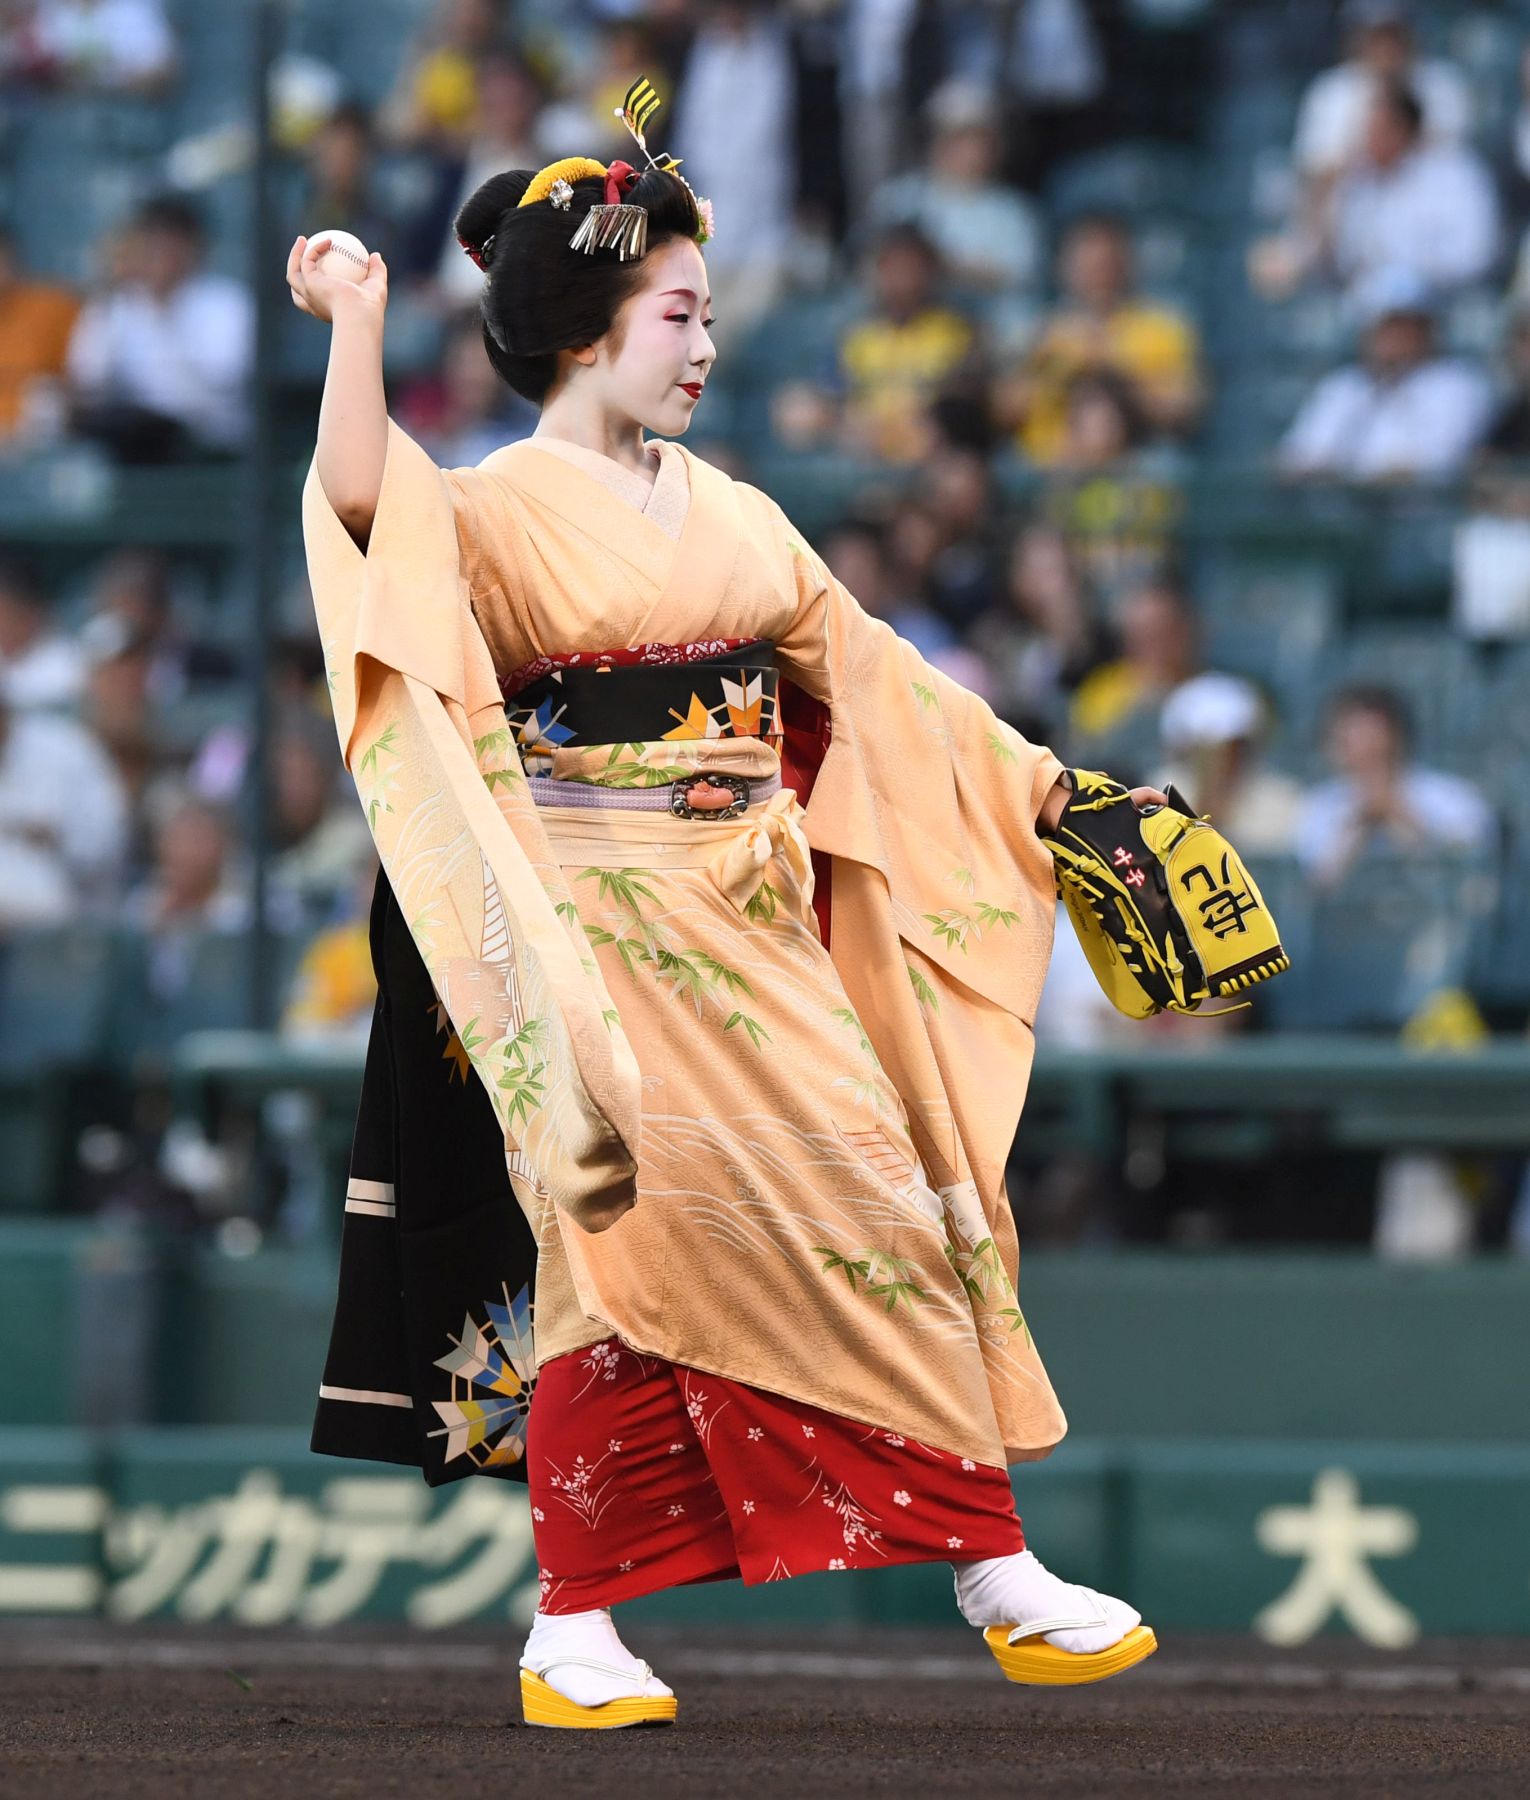 Maiko First Pitch of the Baseball Season